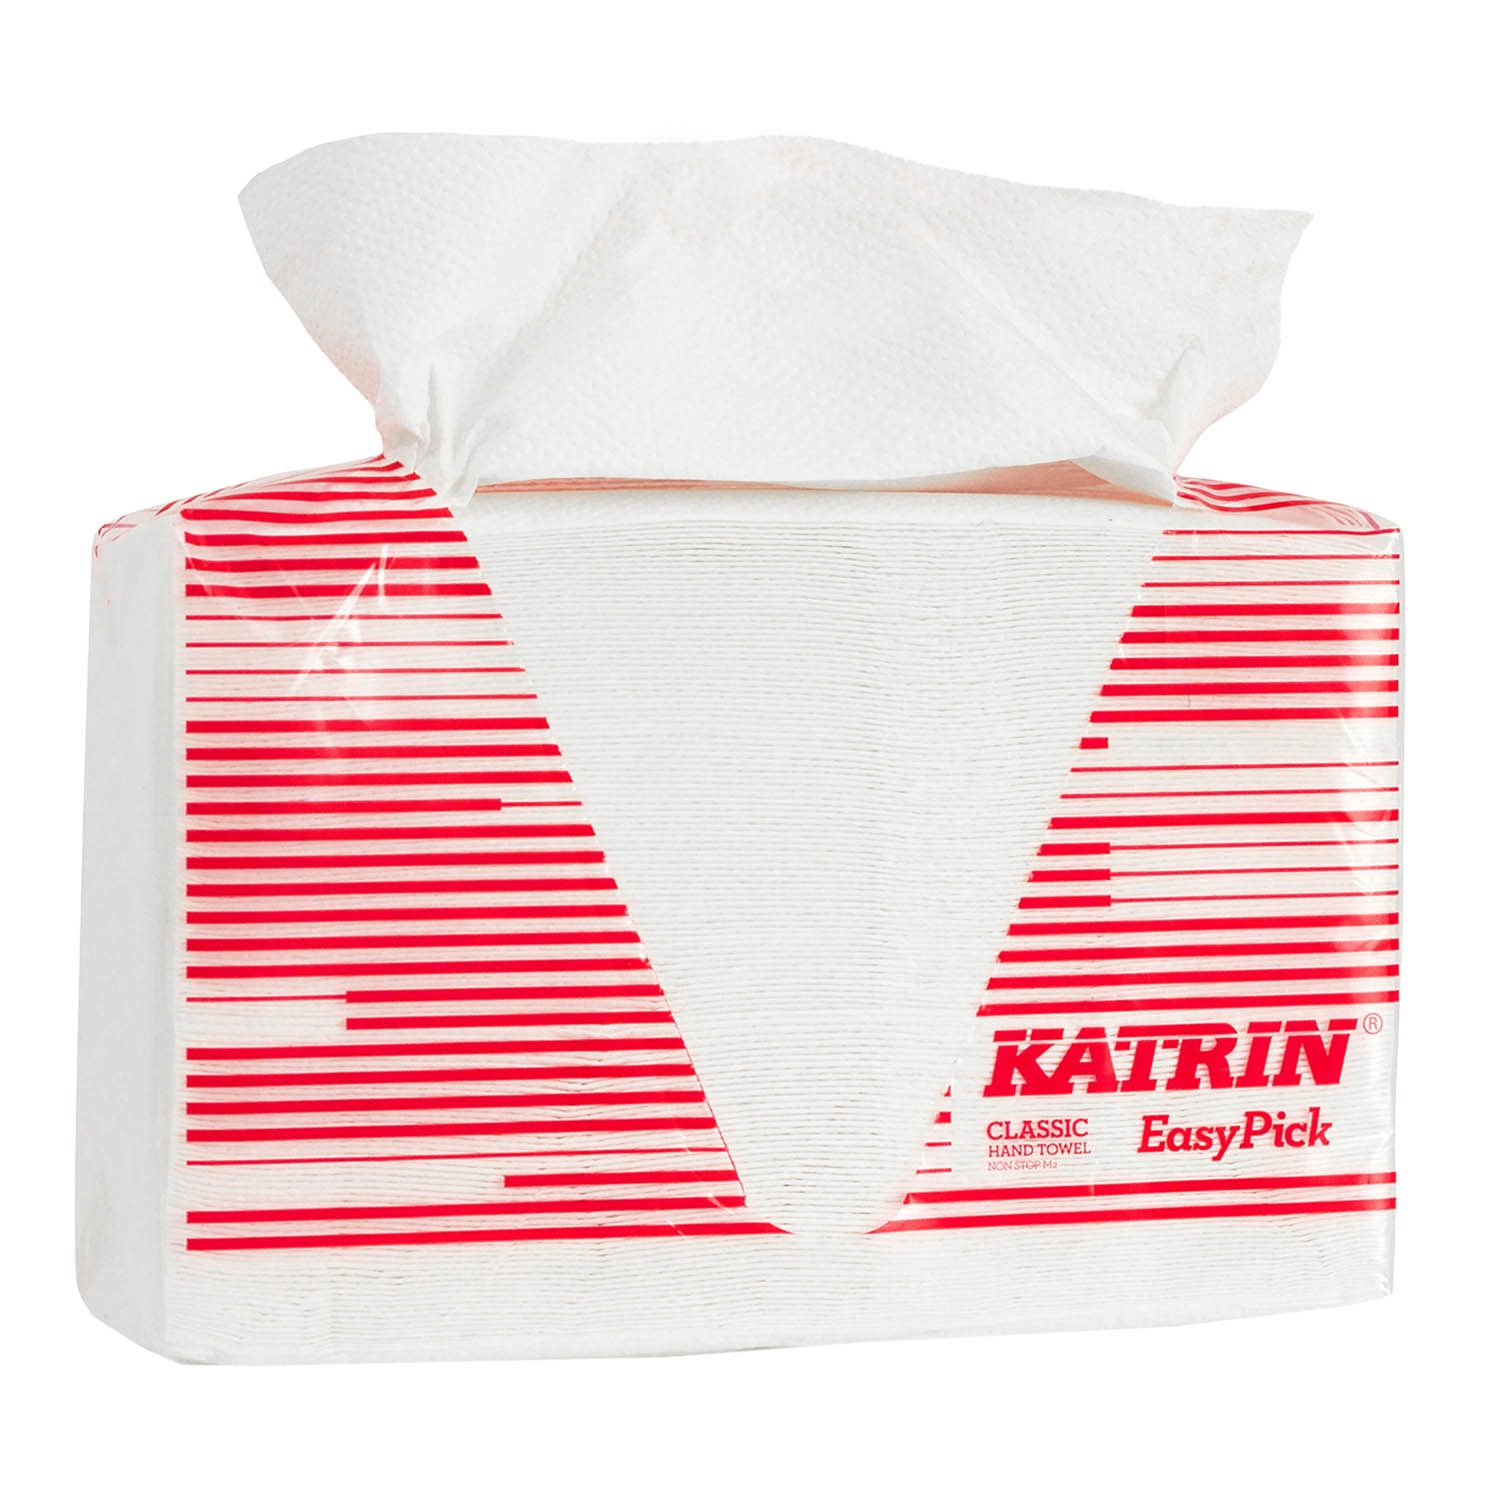 Z полотенца купить. Полотенца Katrin бумажные. 26630 Полотенца в рулонах Katrin Classic Laminated m2. Упаковка бумажных полотенец. Полотенца для диспенсера.